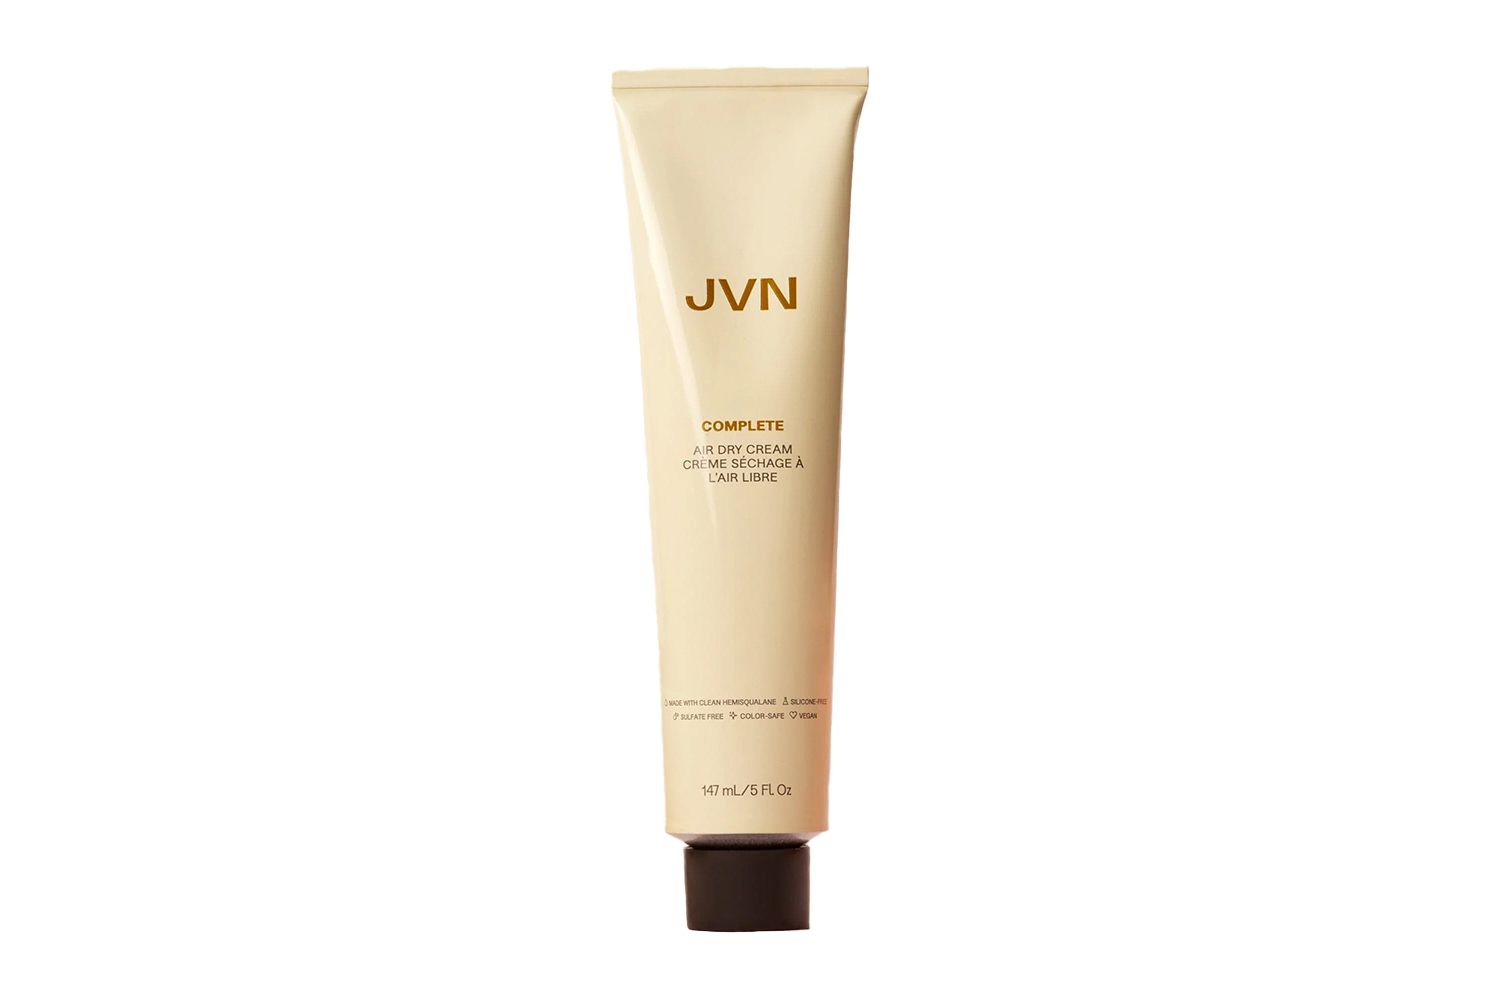 JVN Complete Air Dry Cream Alterna Caviar Anti-Aging Replenishing Moisture Masque, $ 32 (originalmente $ 45)